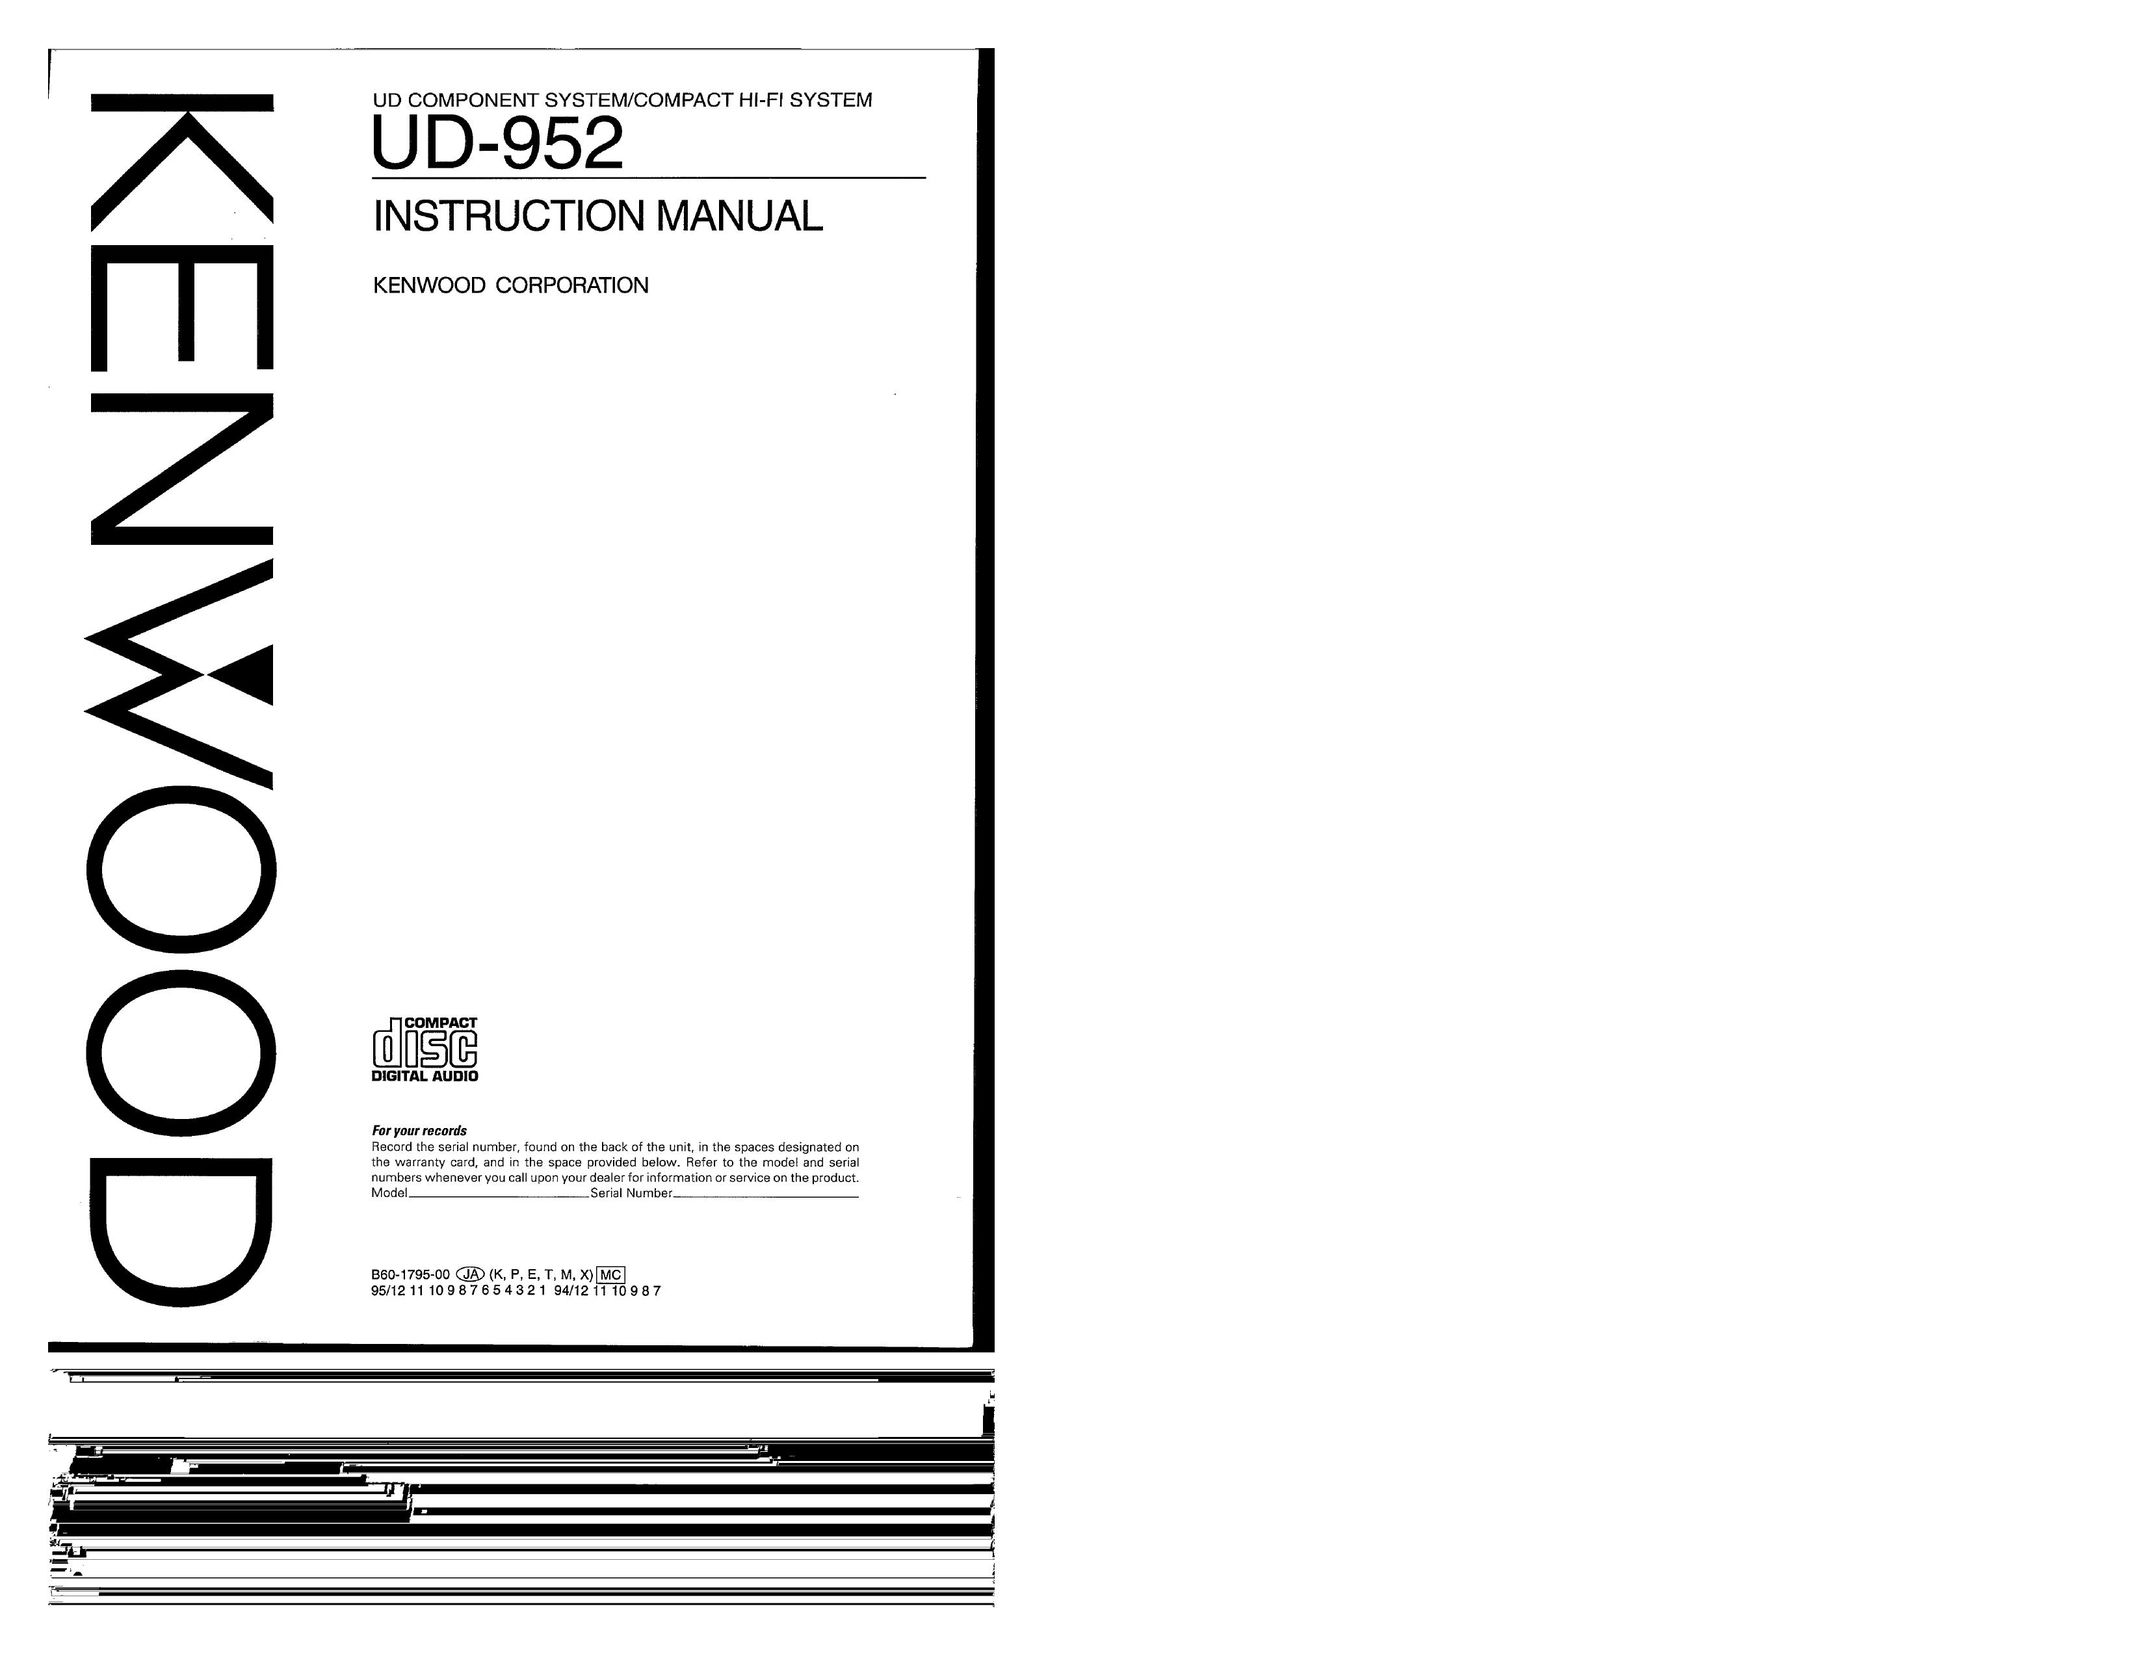 Kenwood UD-952 Saw User Manual